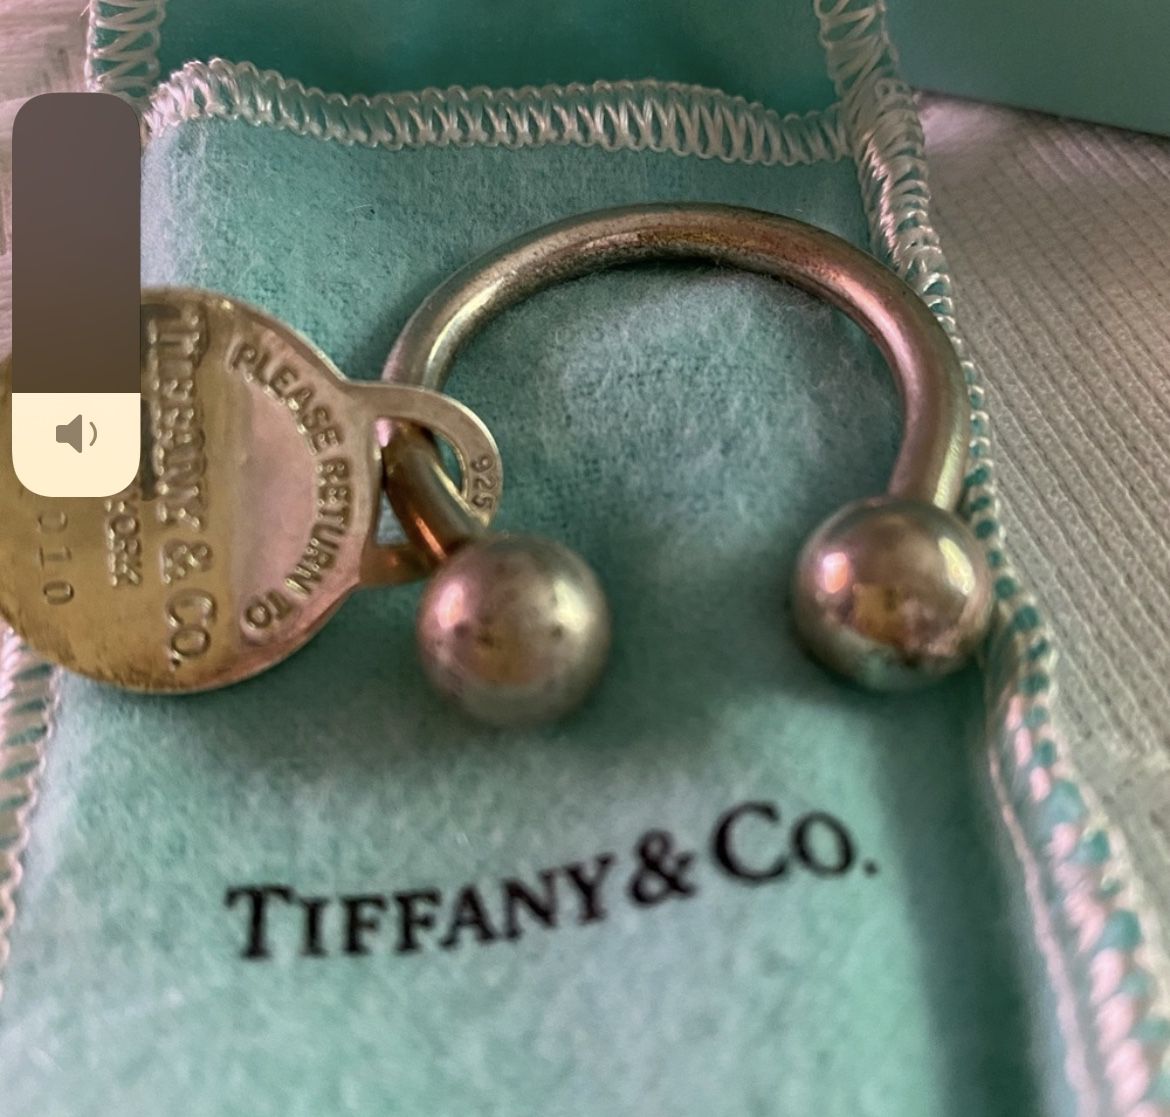 Authentic Tiffany and Company keychain